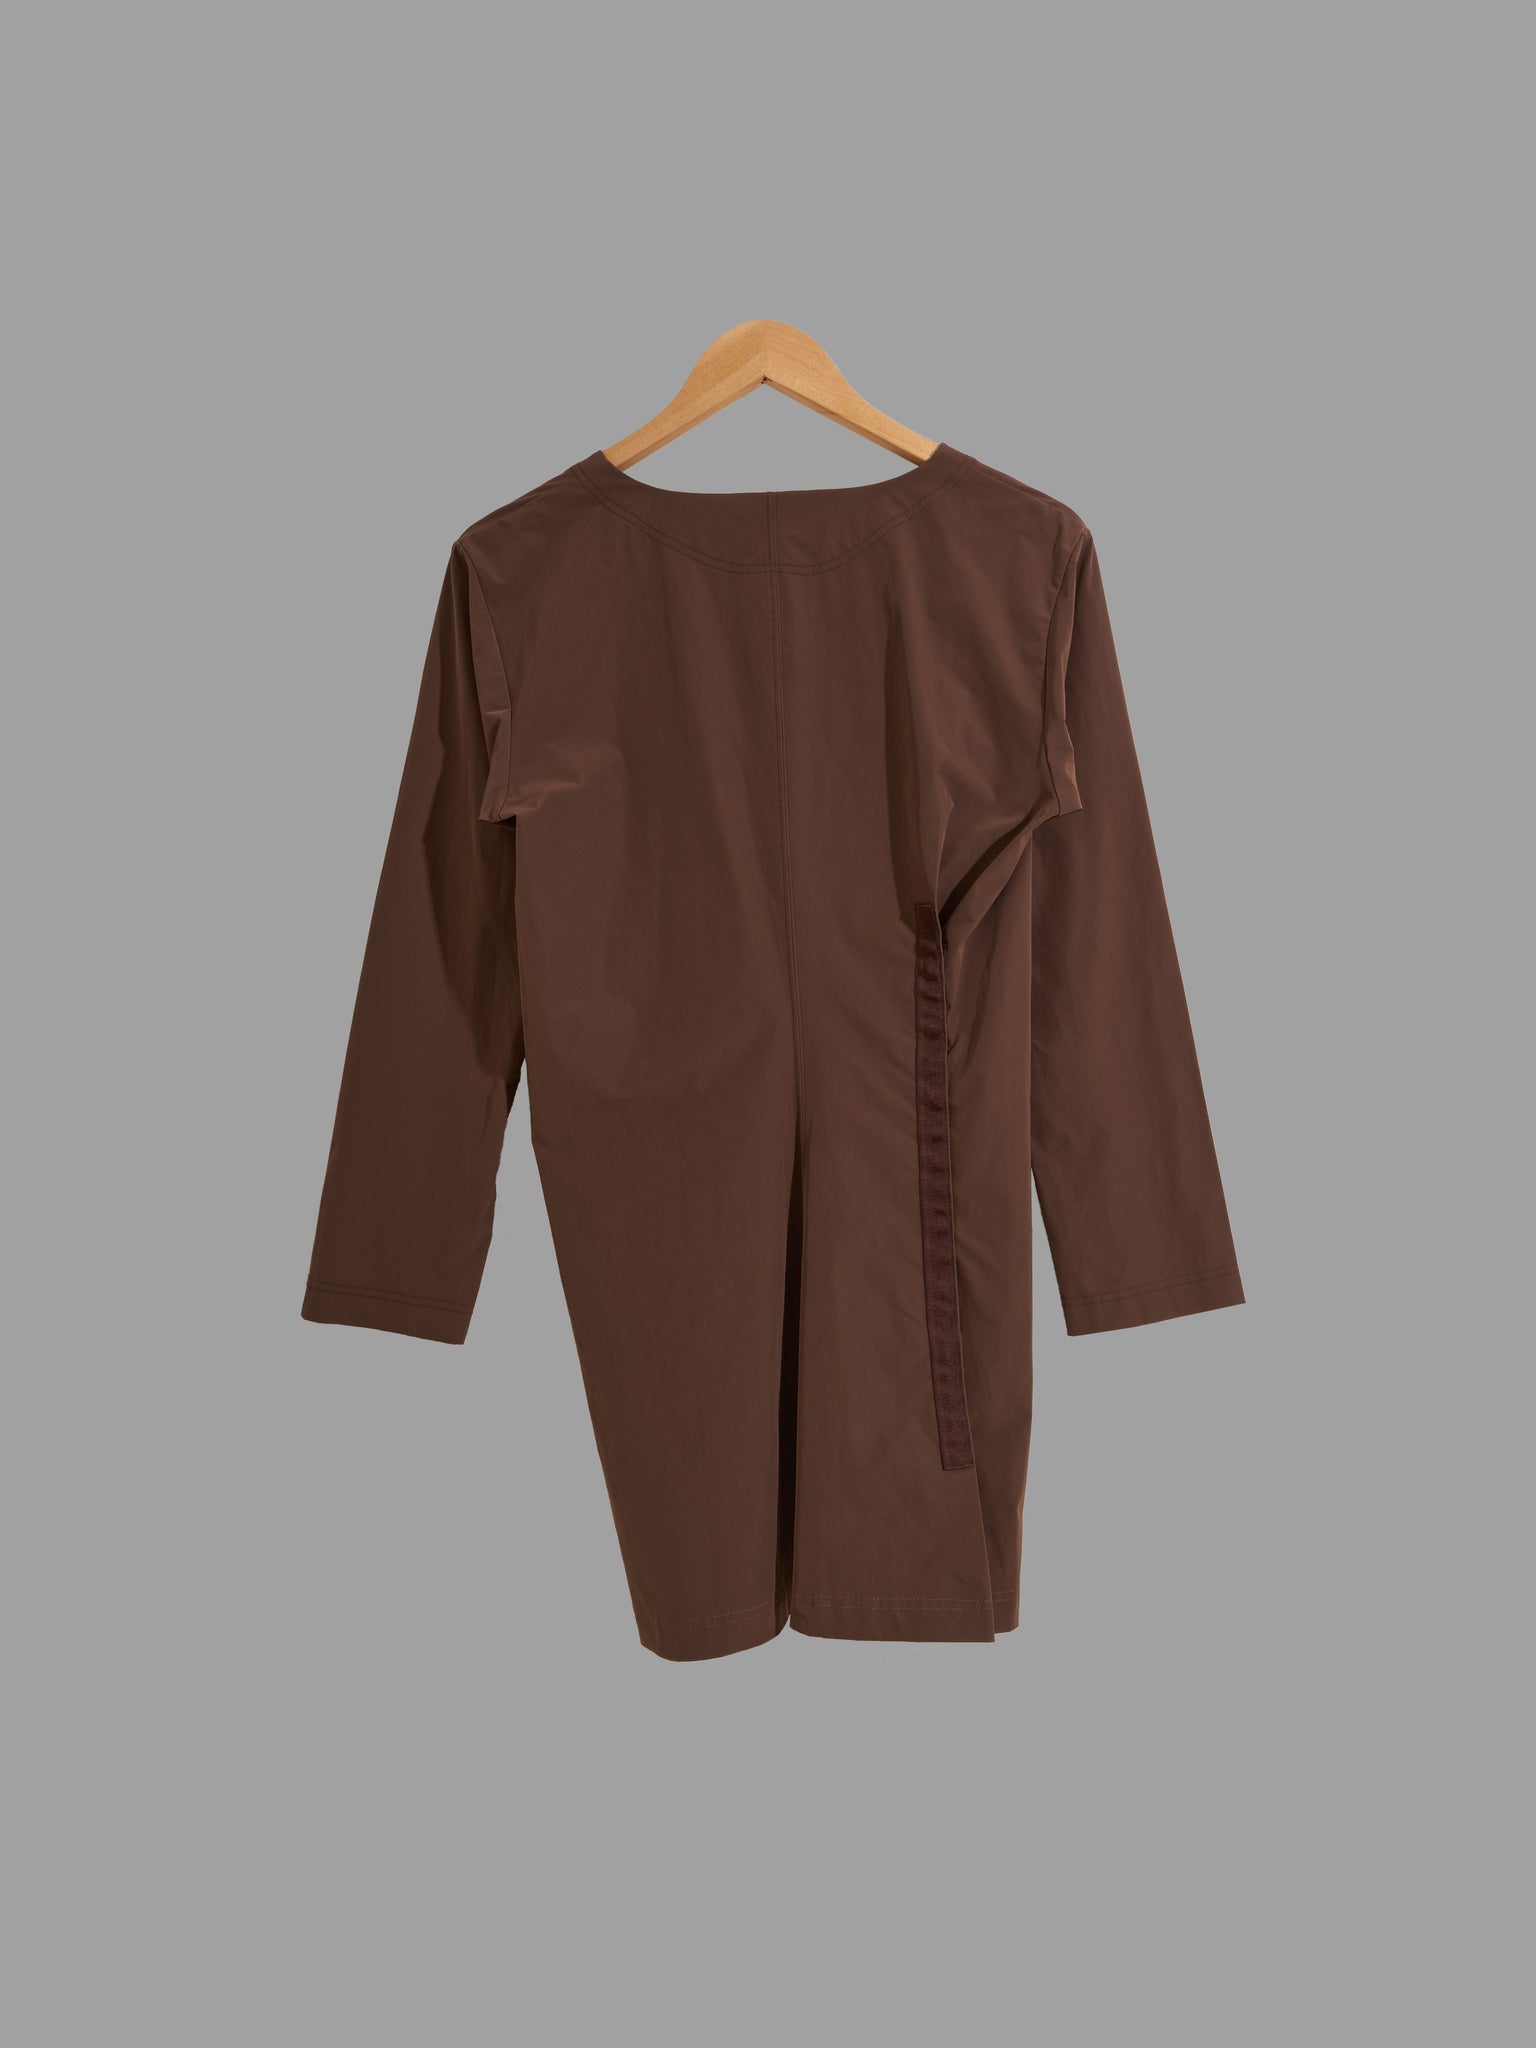 Issey Miyake brown press stud detail brown v neck tunic dress - size 2 JP M S